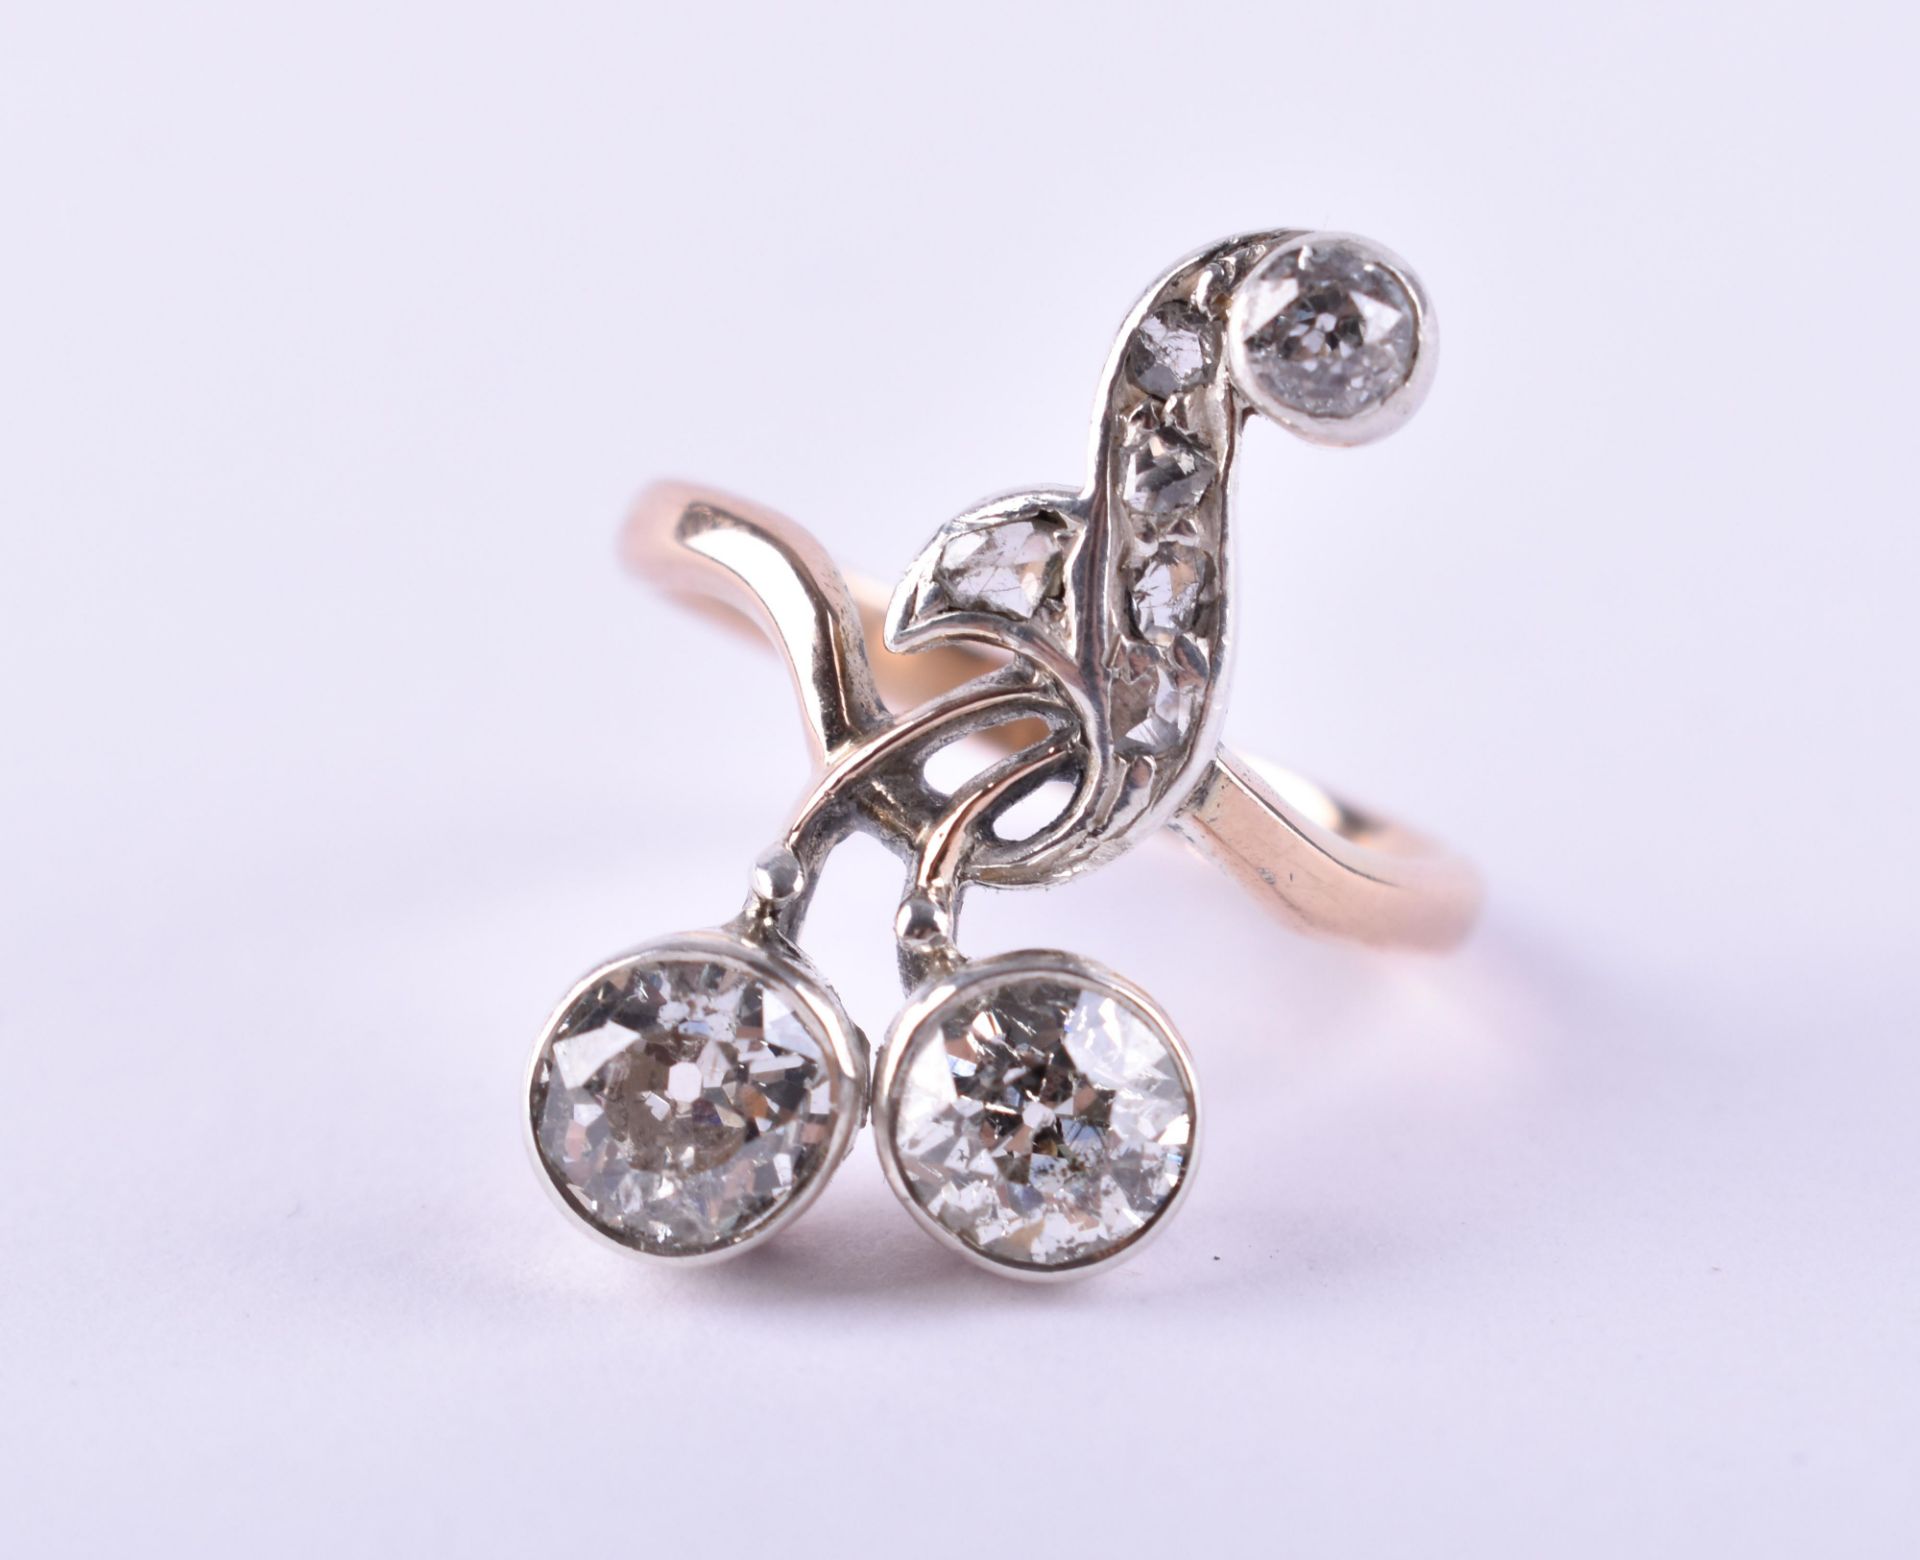  Art Nouveau diamond ring